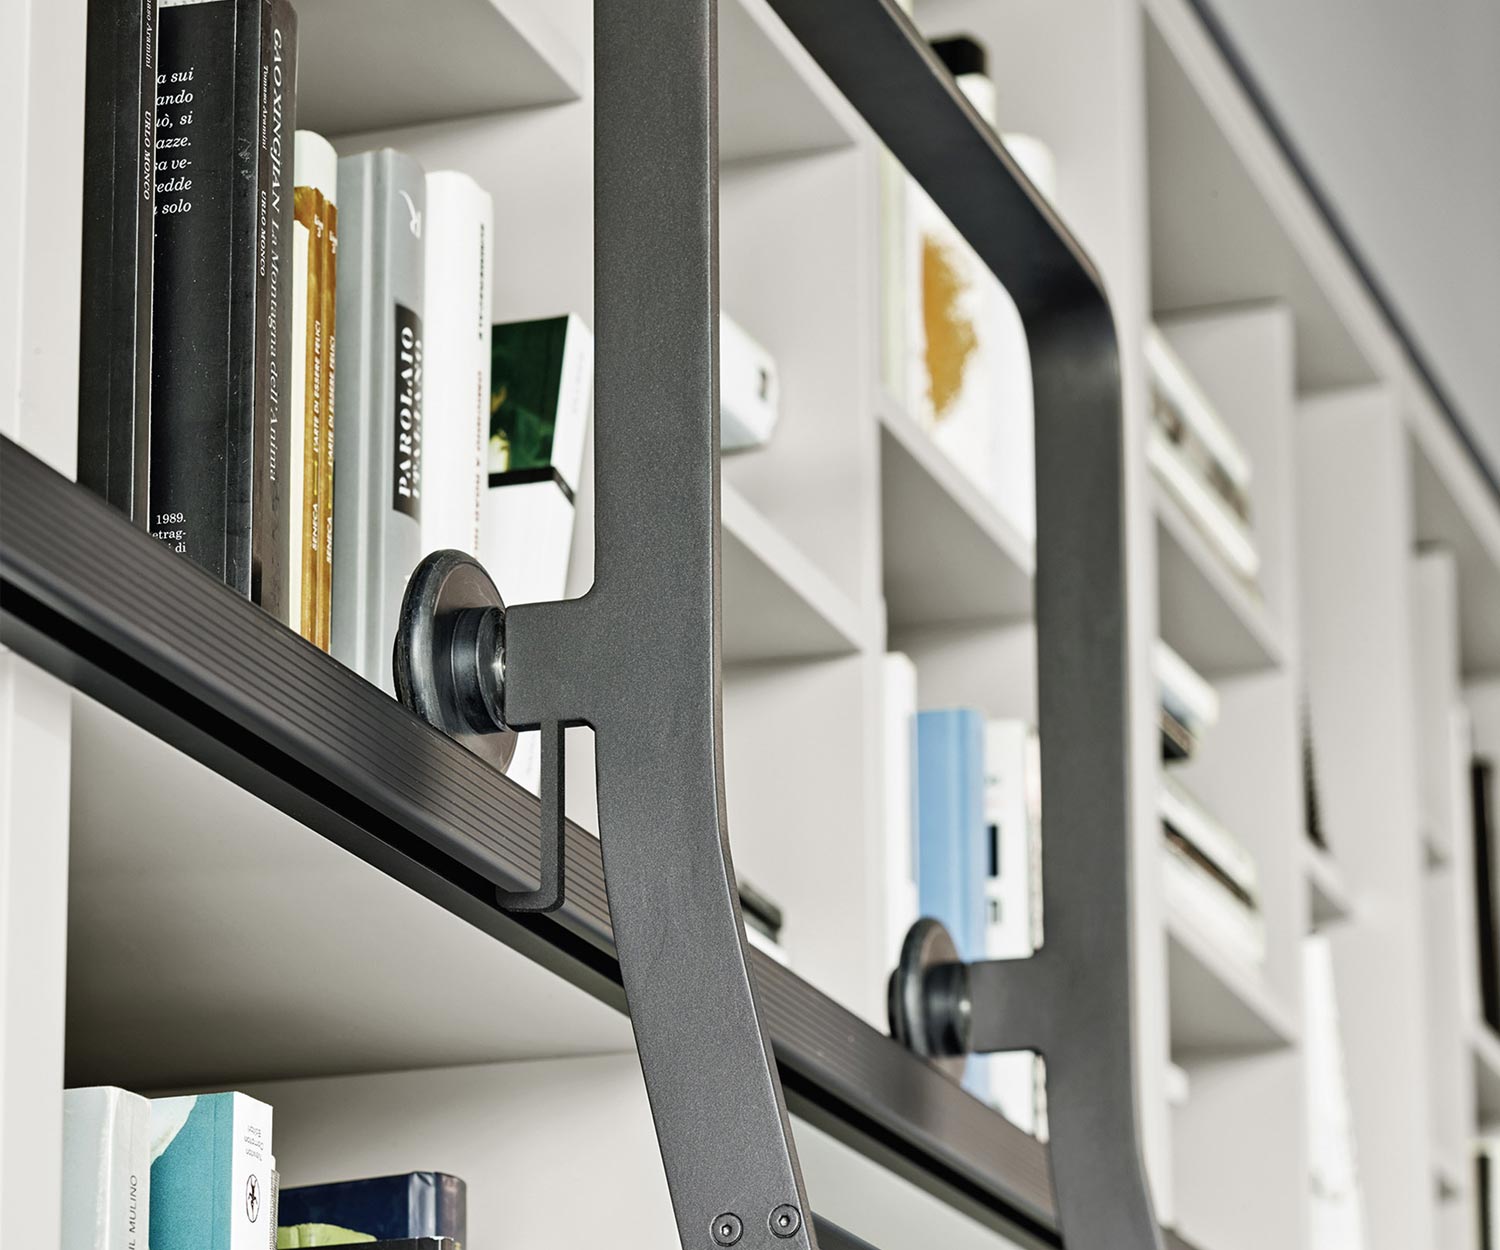 Hoogwaardige Livitalia Design boekenkast C60 met ladder, verrijdbaar op wieltjes